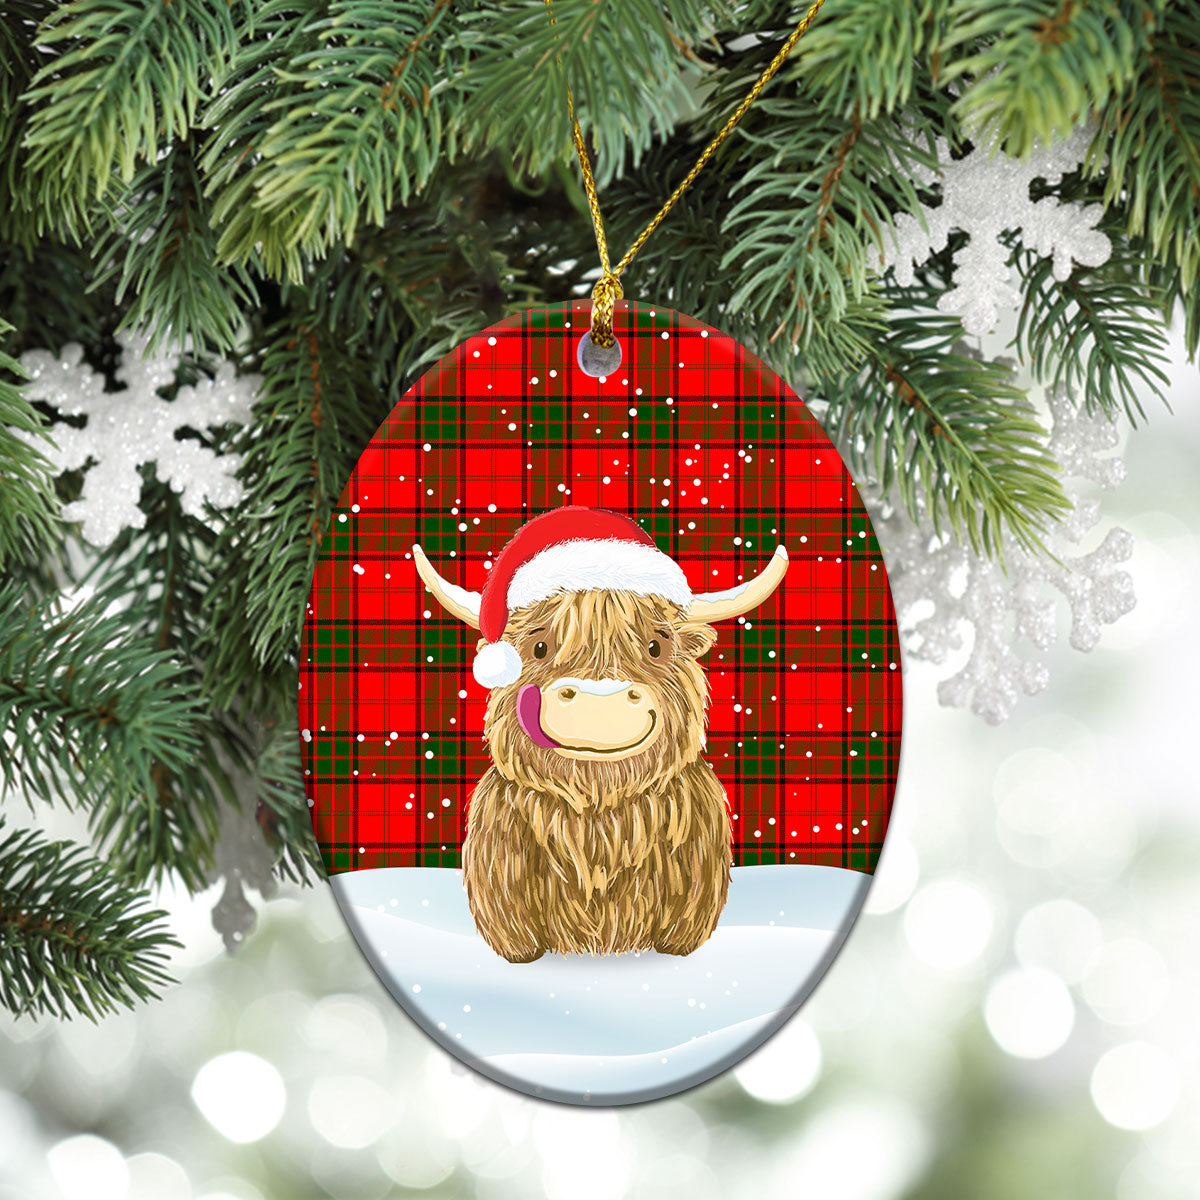 Maxtone Tartan Christmas Ceramic Ornament - Highland Cows Style